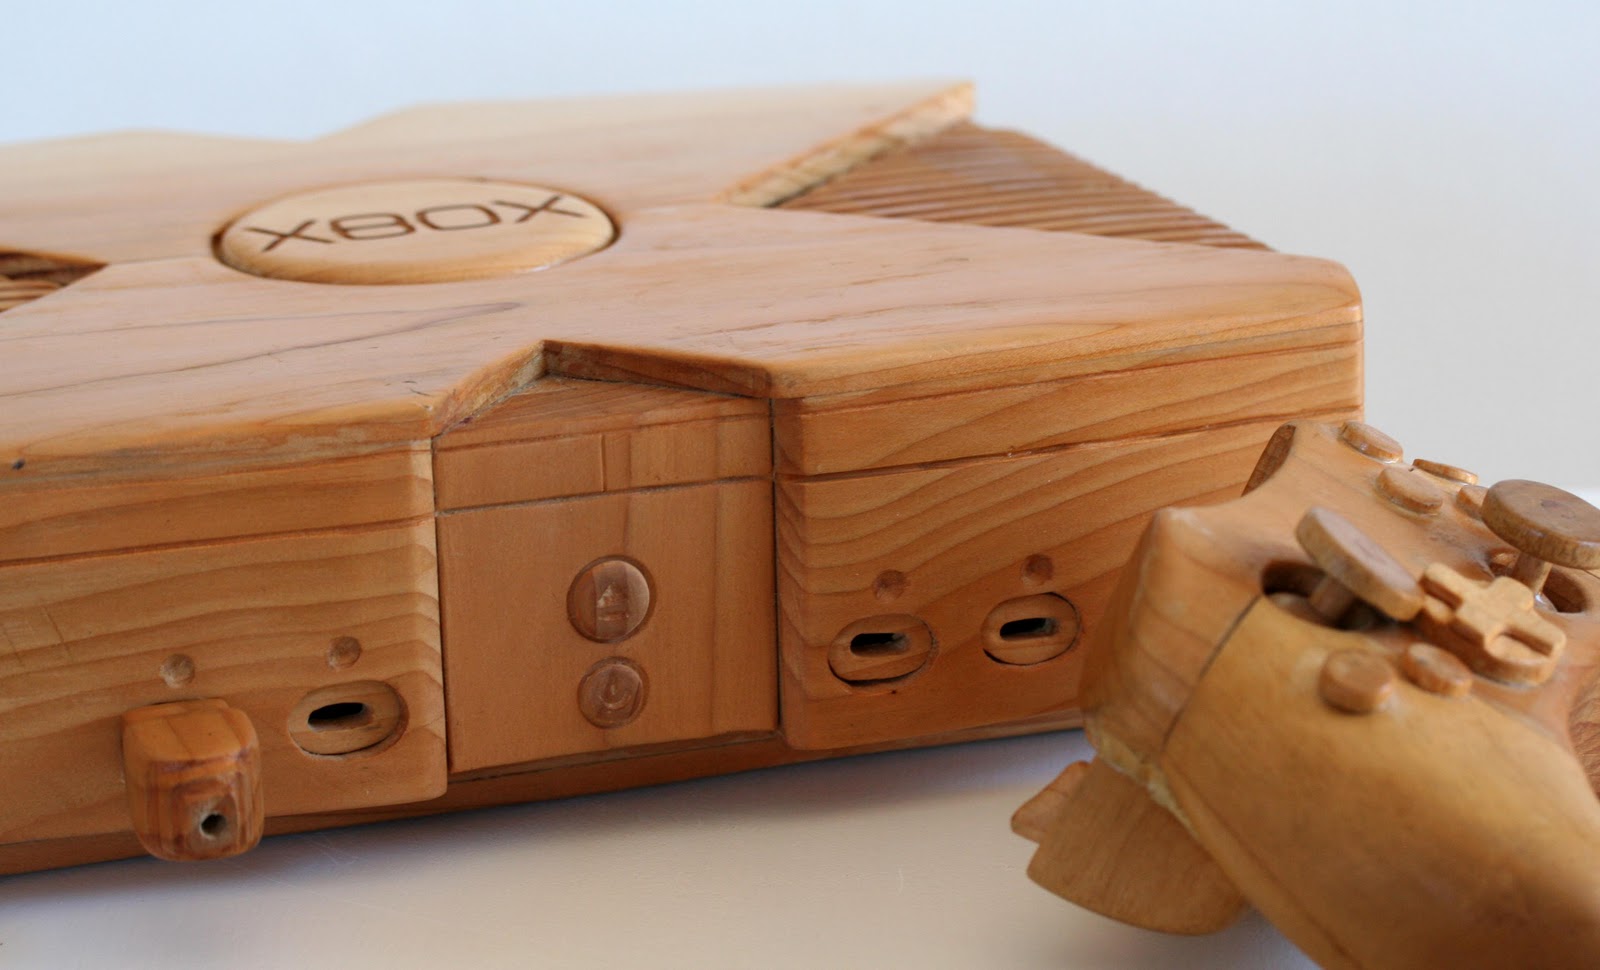 wooden-xbox-console-sculpture-design-9.jpg